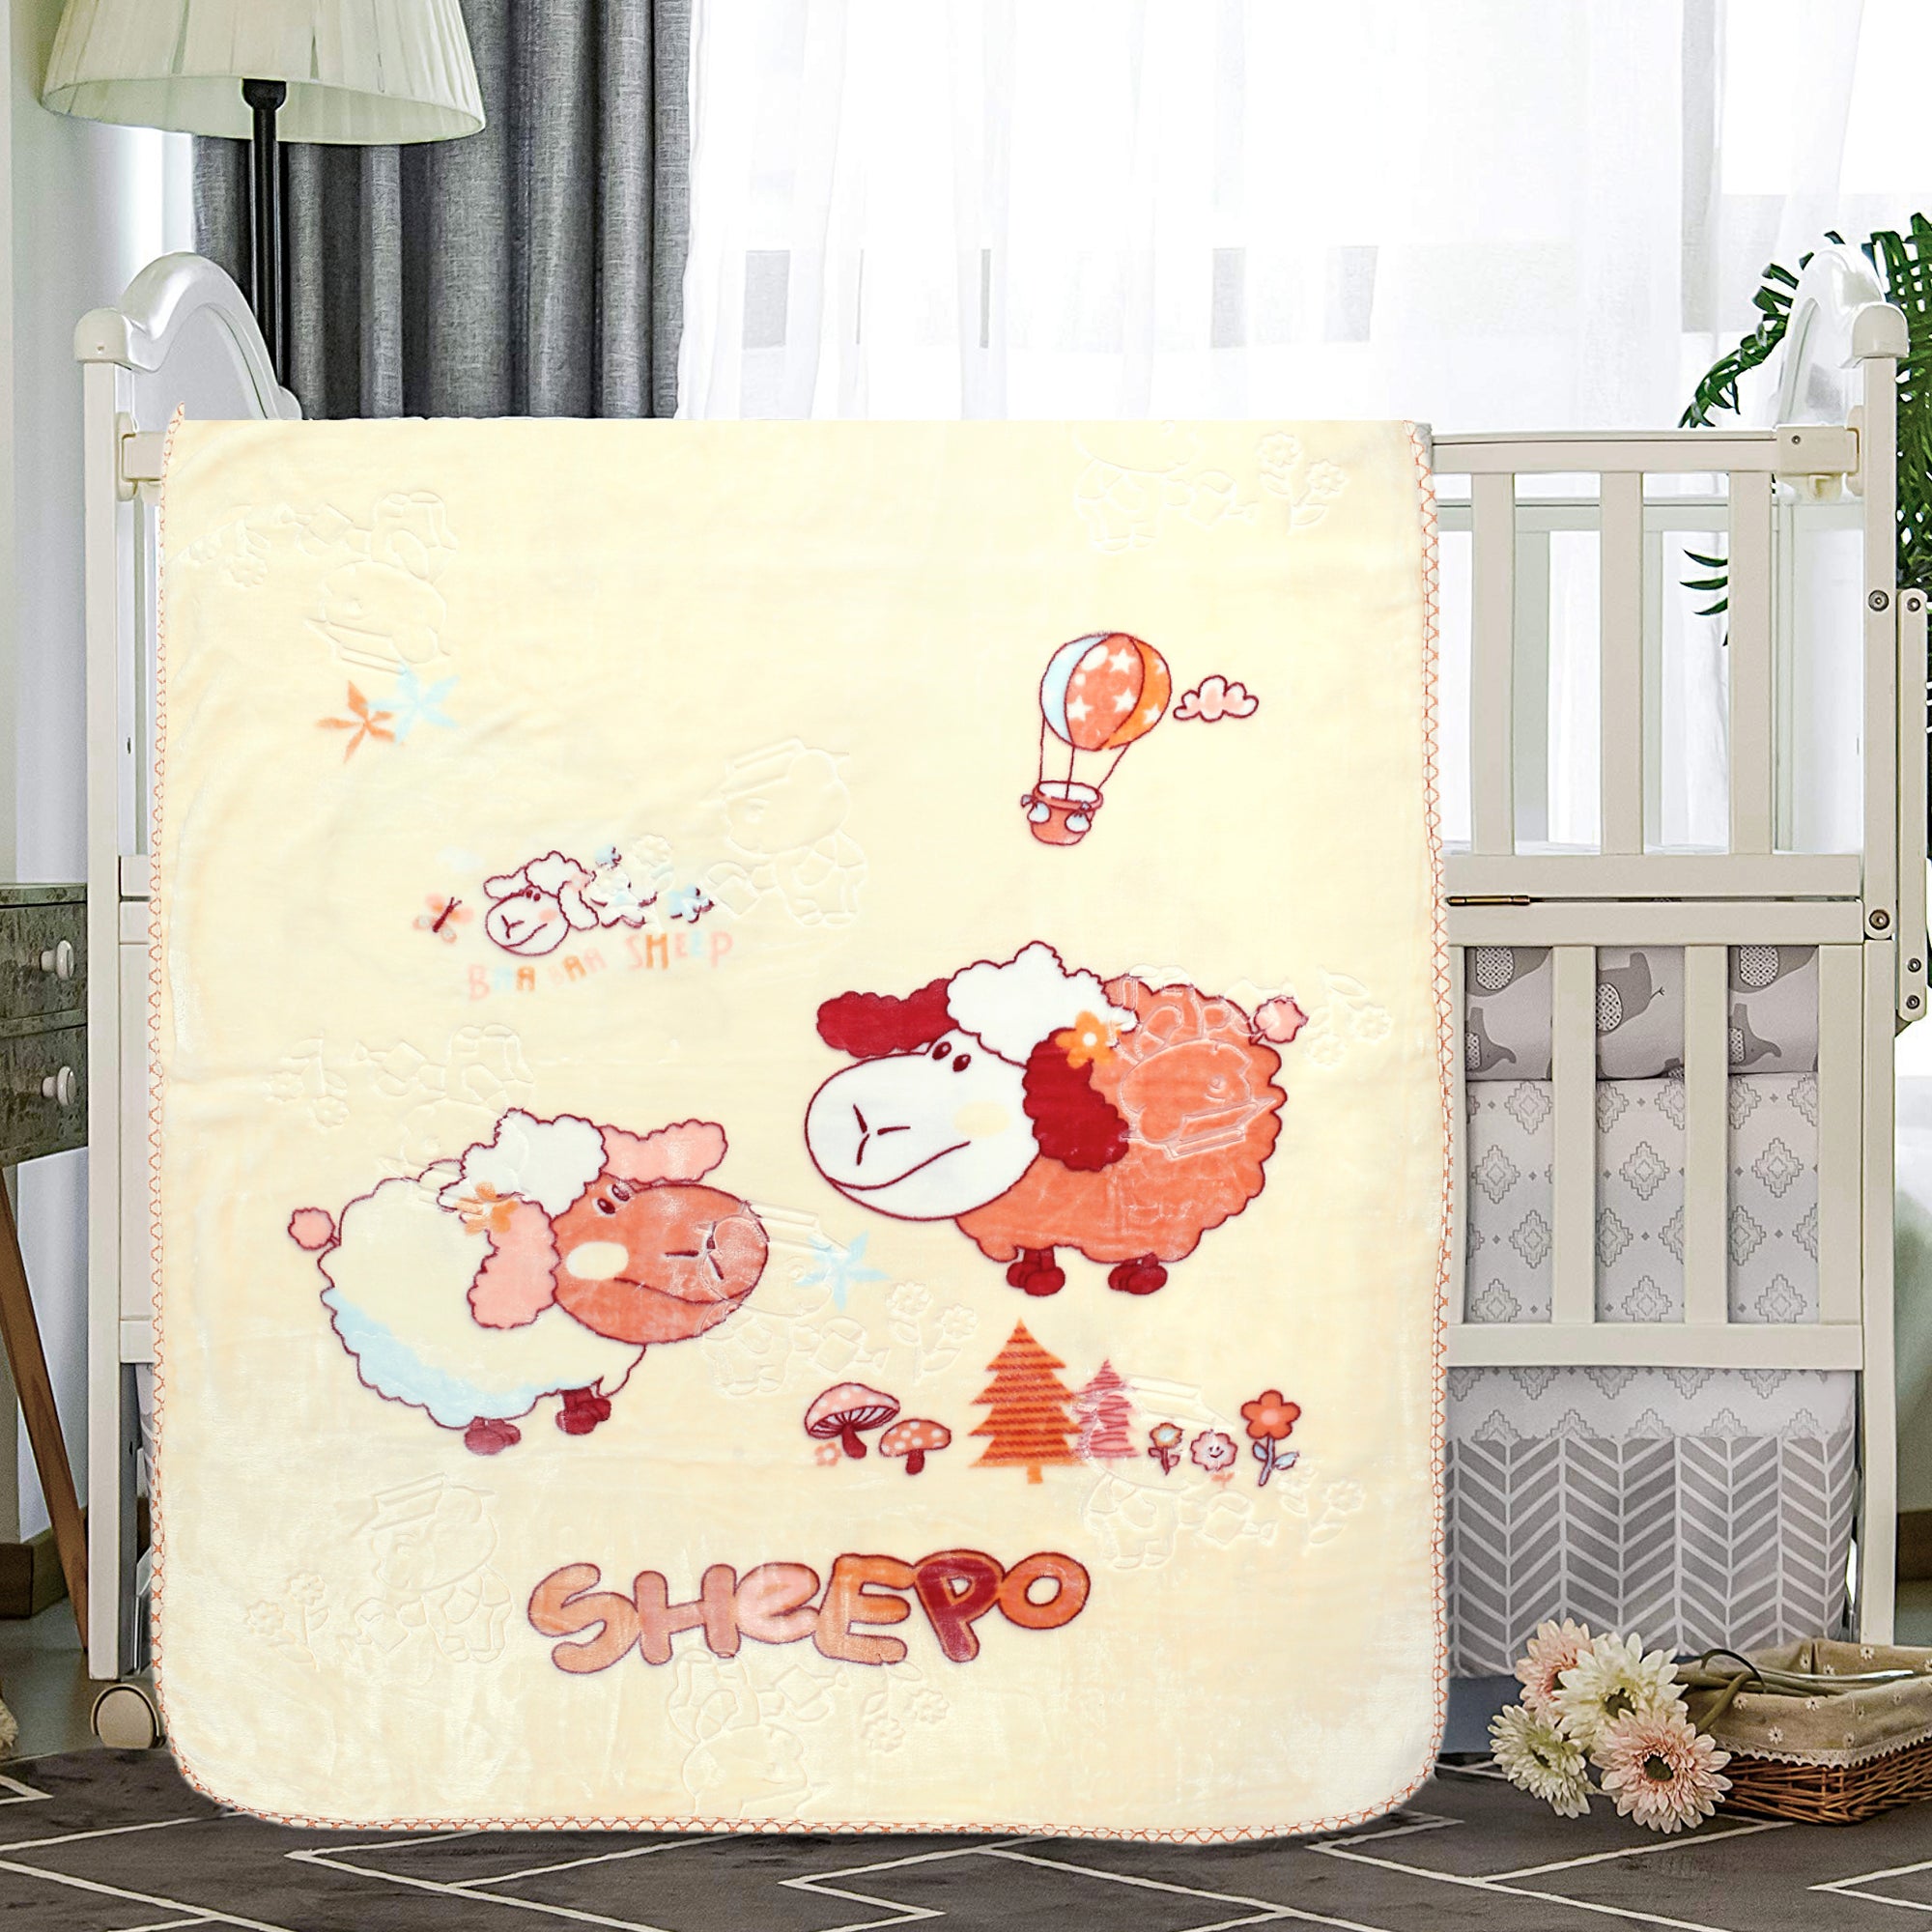 Sleepy Sheep Cream Blanket - Baby Moo